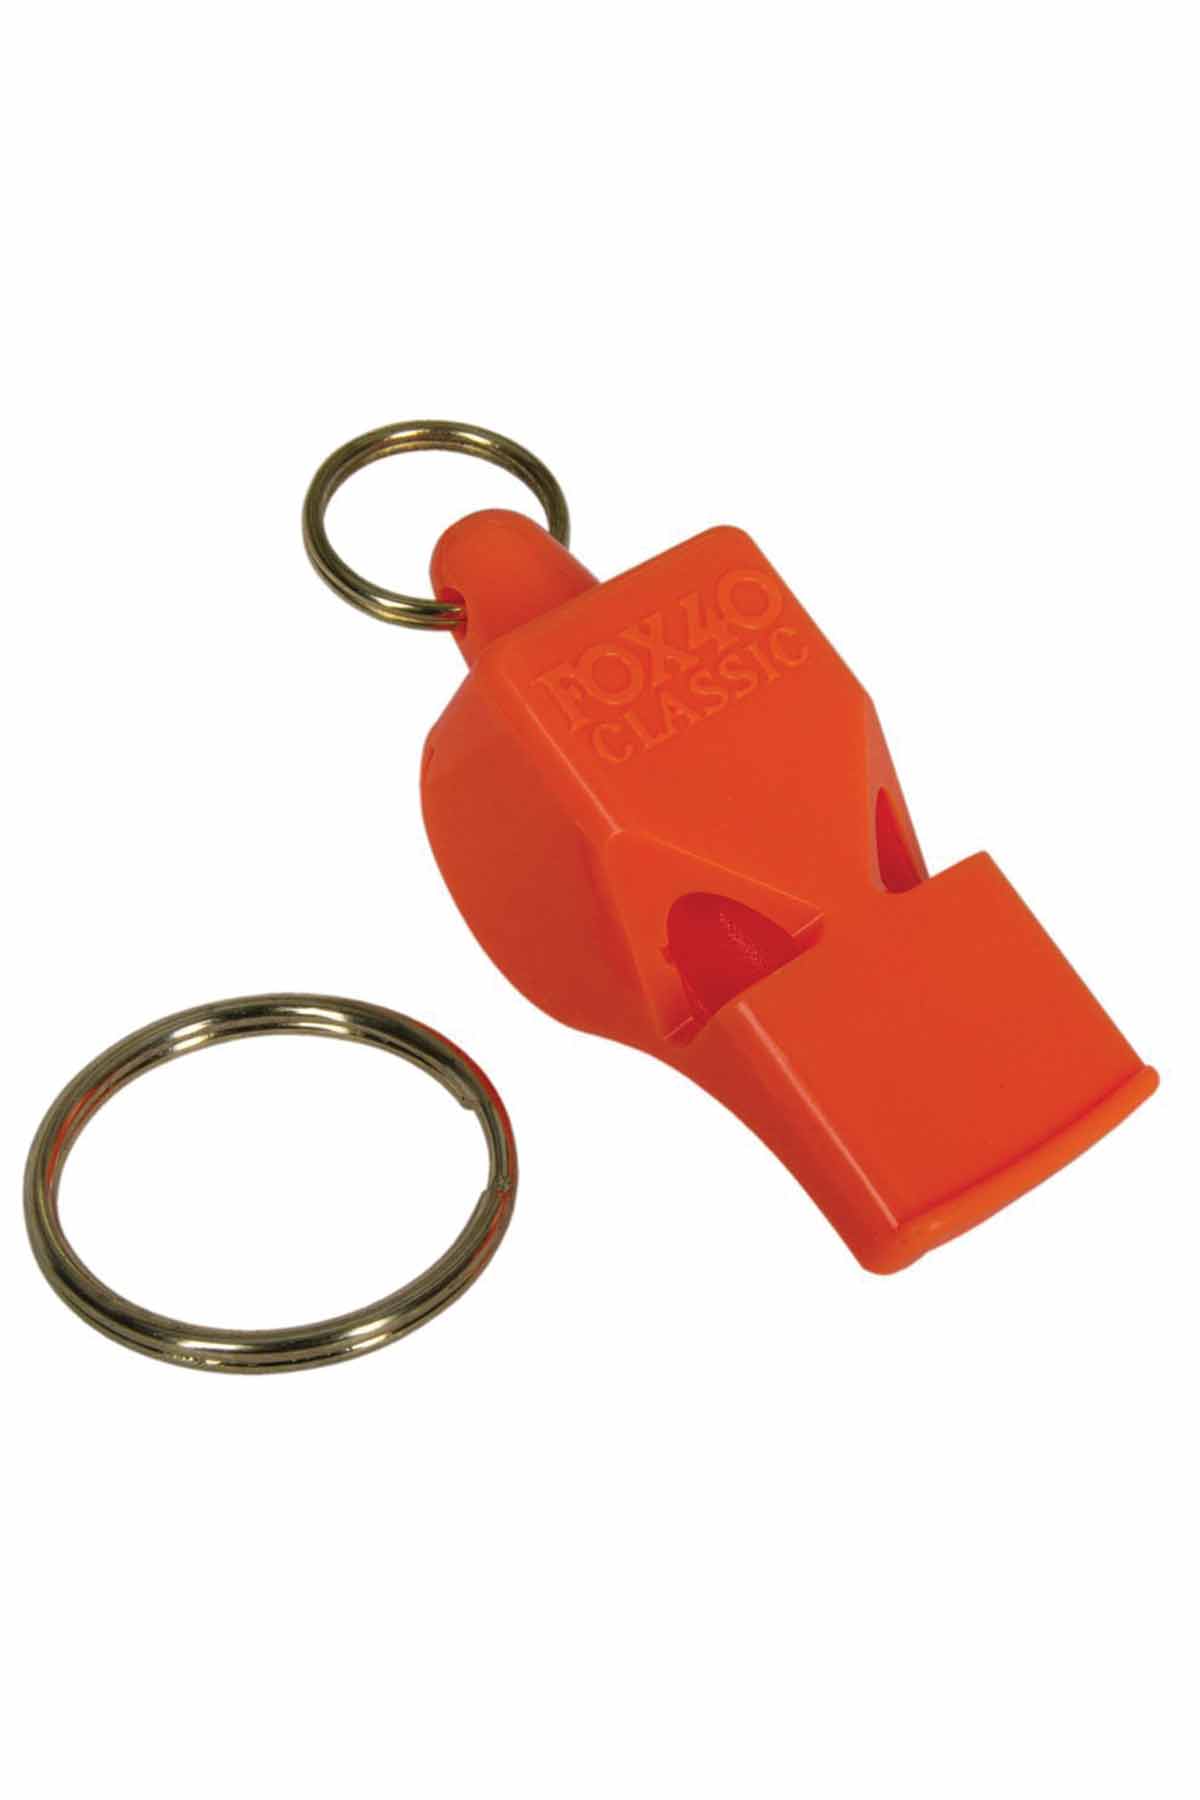 Fox 40 Safety Whistle Orange